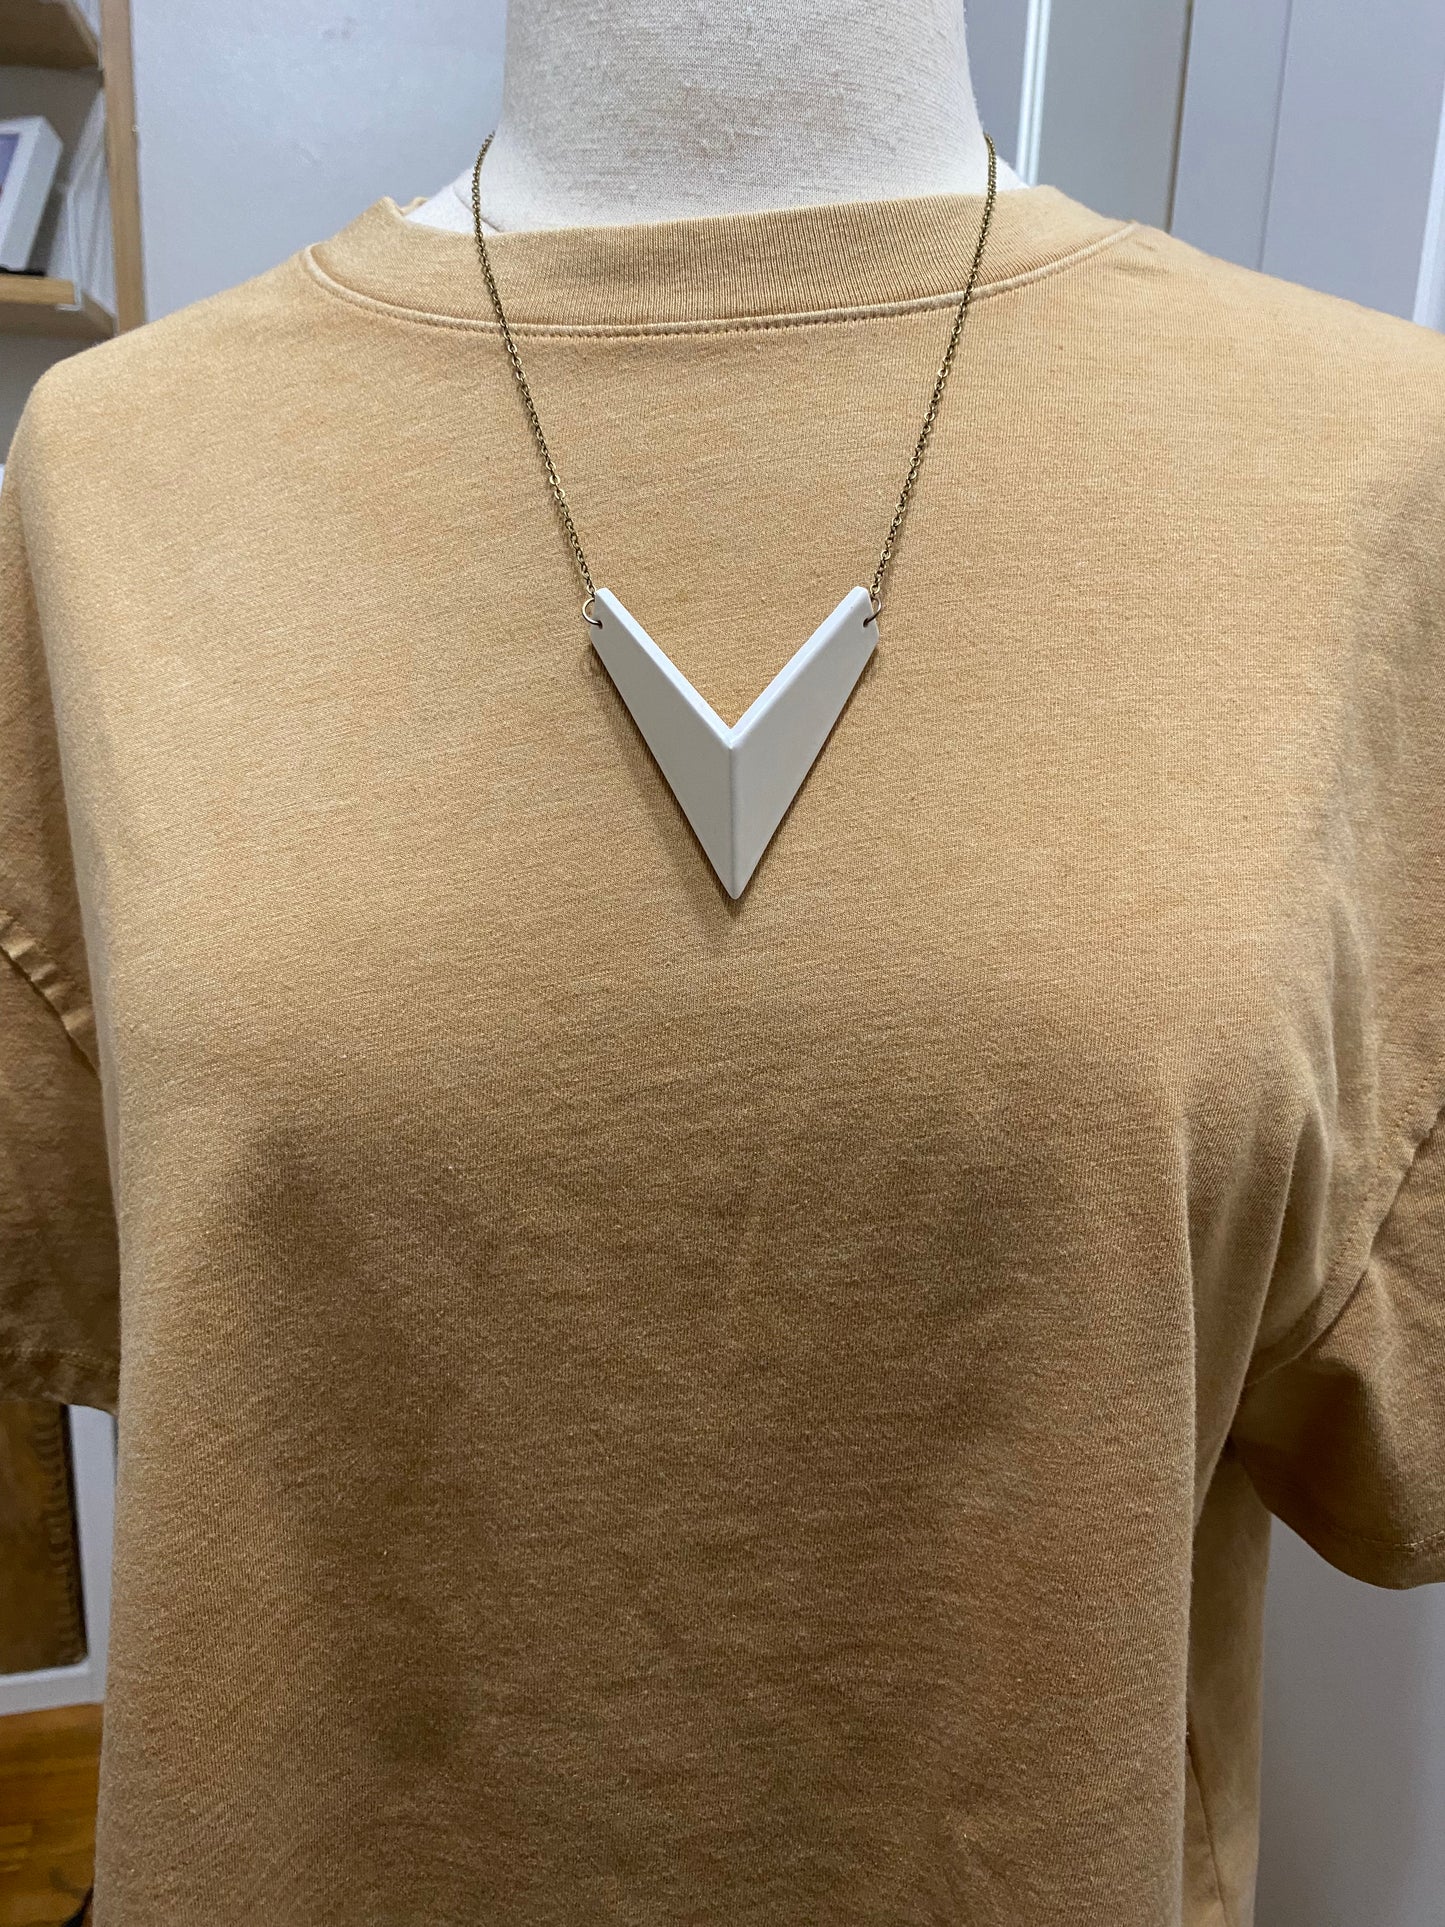 Arrow Quad Necklace - Size III, White